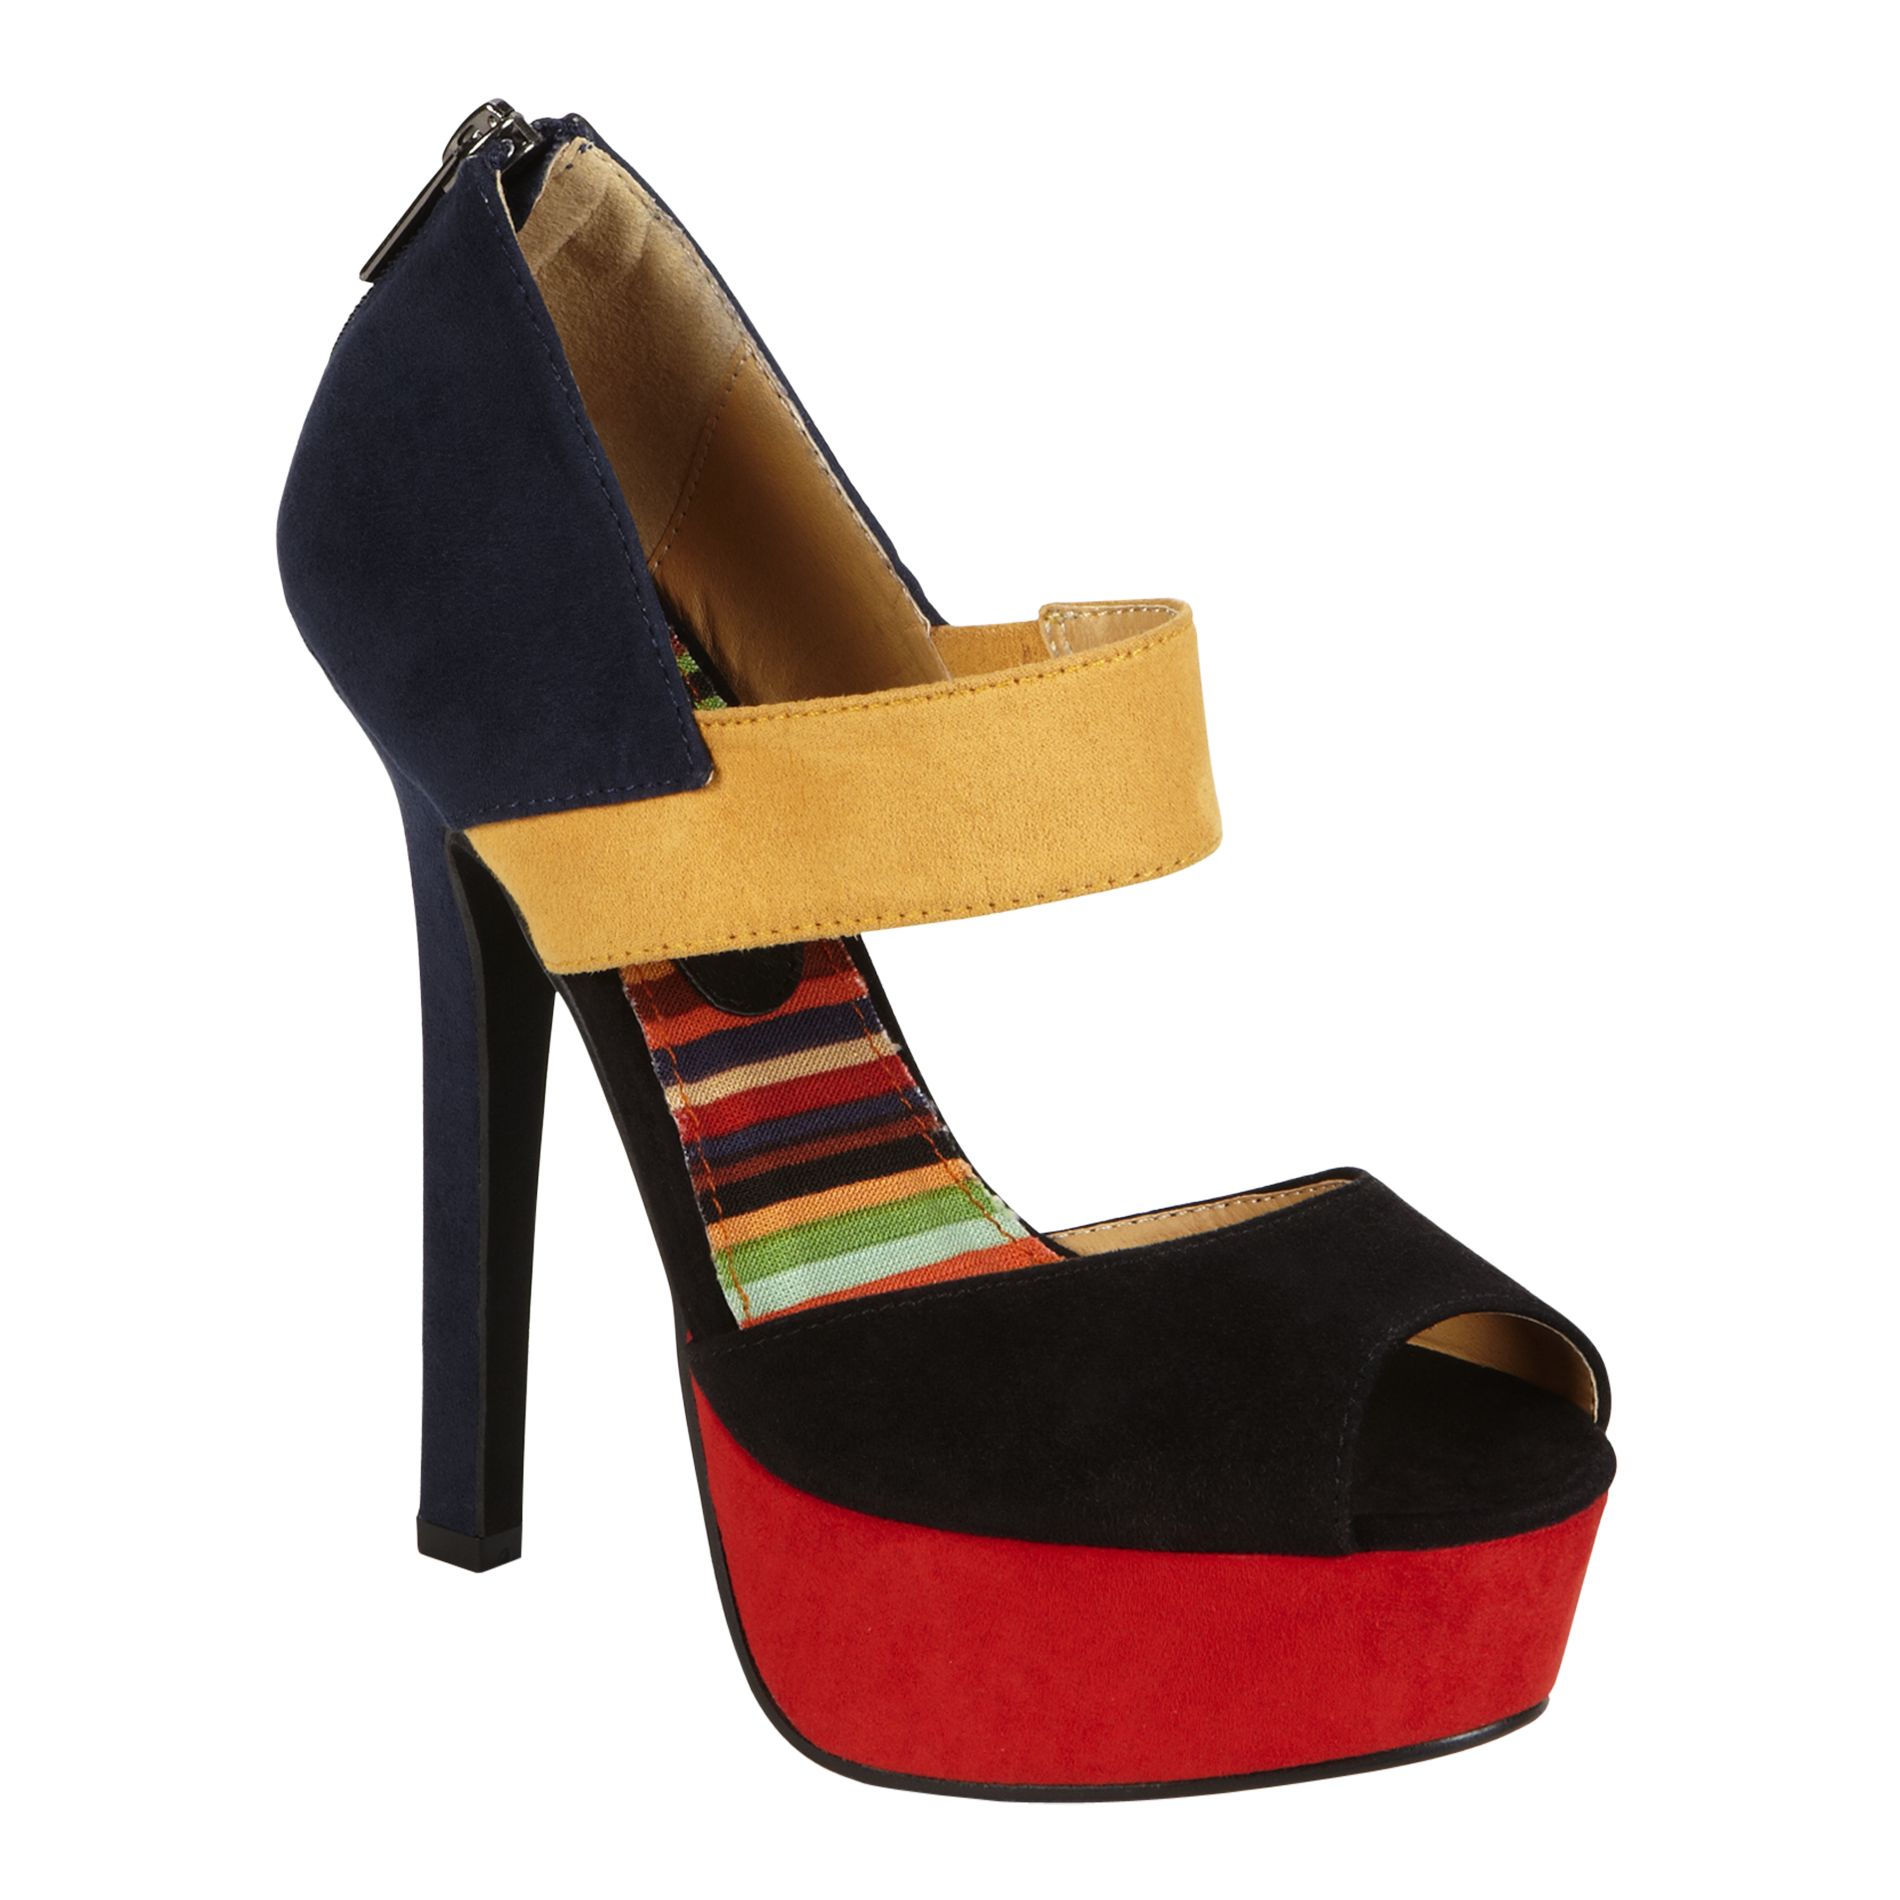 Bongo Women's Chandi Colorblock Platform Sandal - Black/Multi